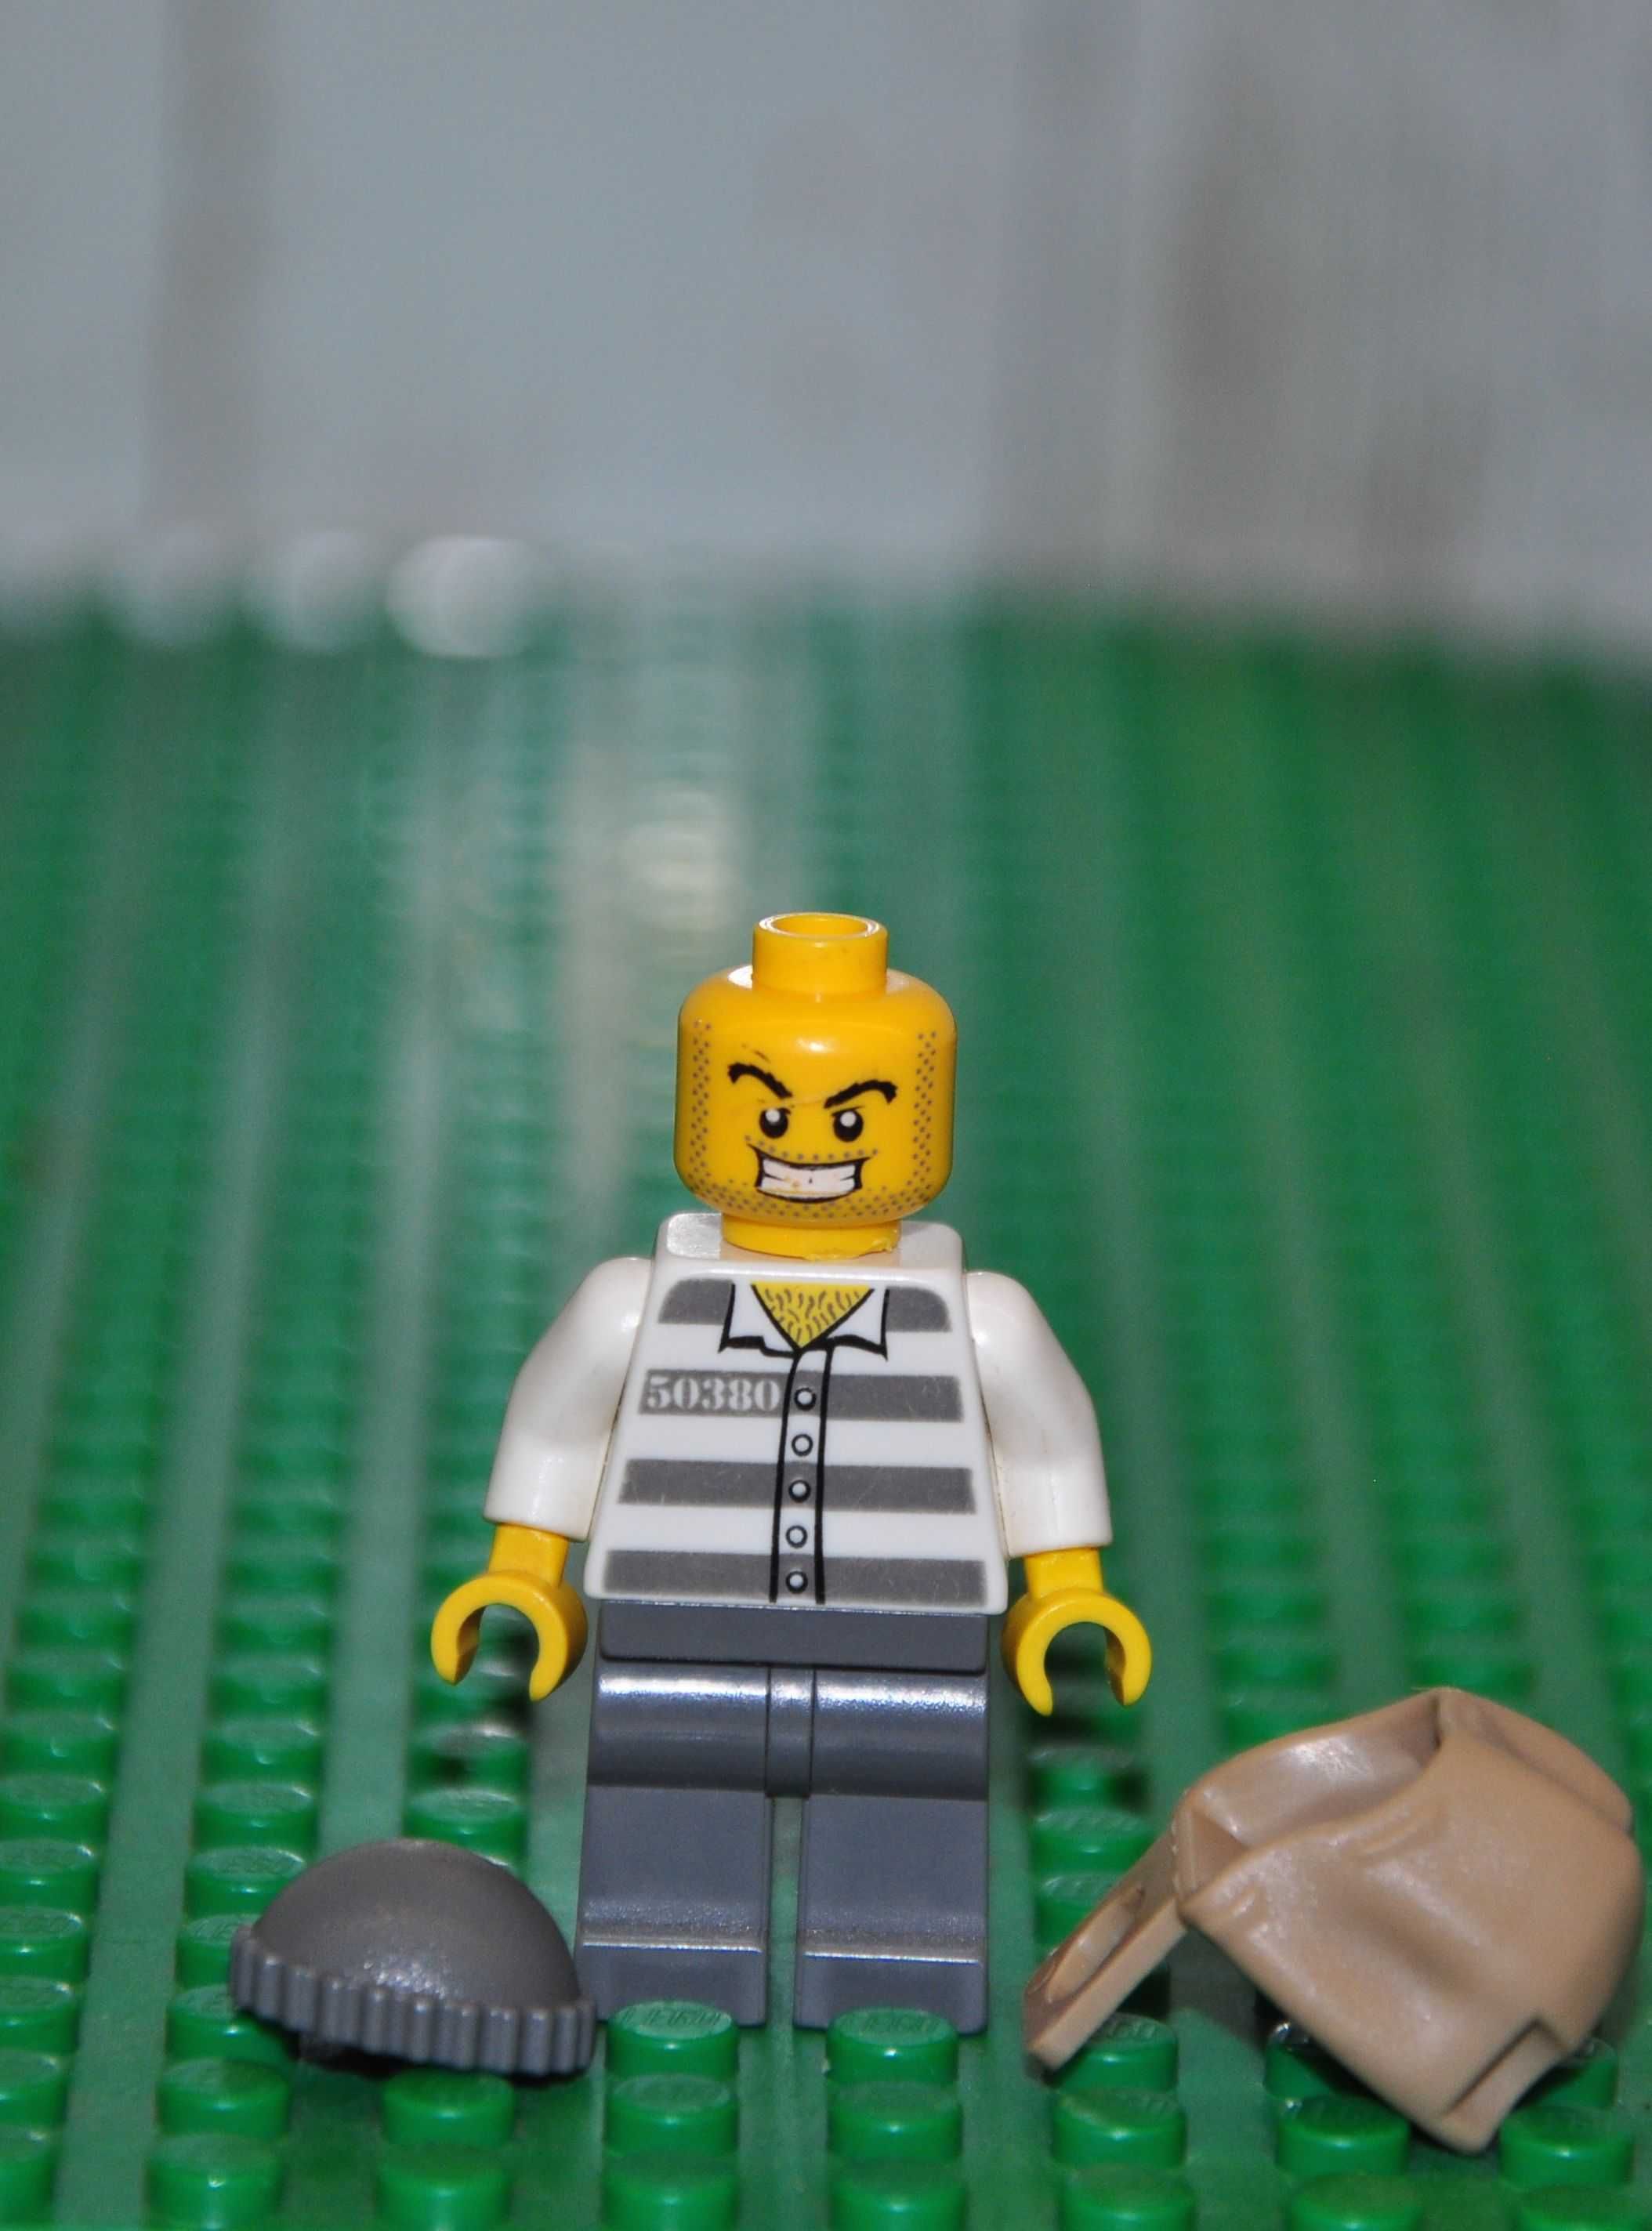 F0539. Figurka LEGO Town - cty0203 Police - Jail Prisoner 50380 Prison